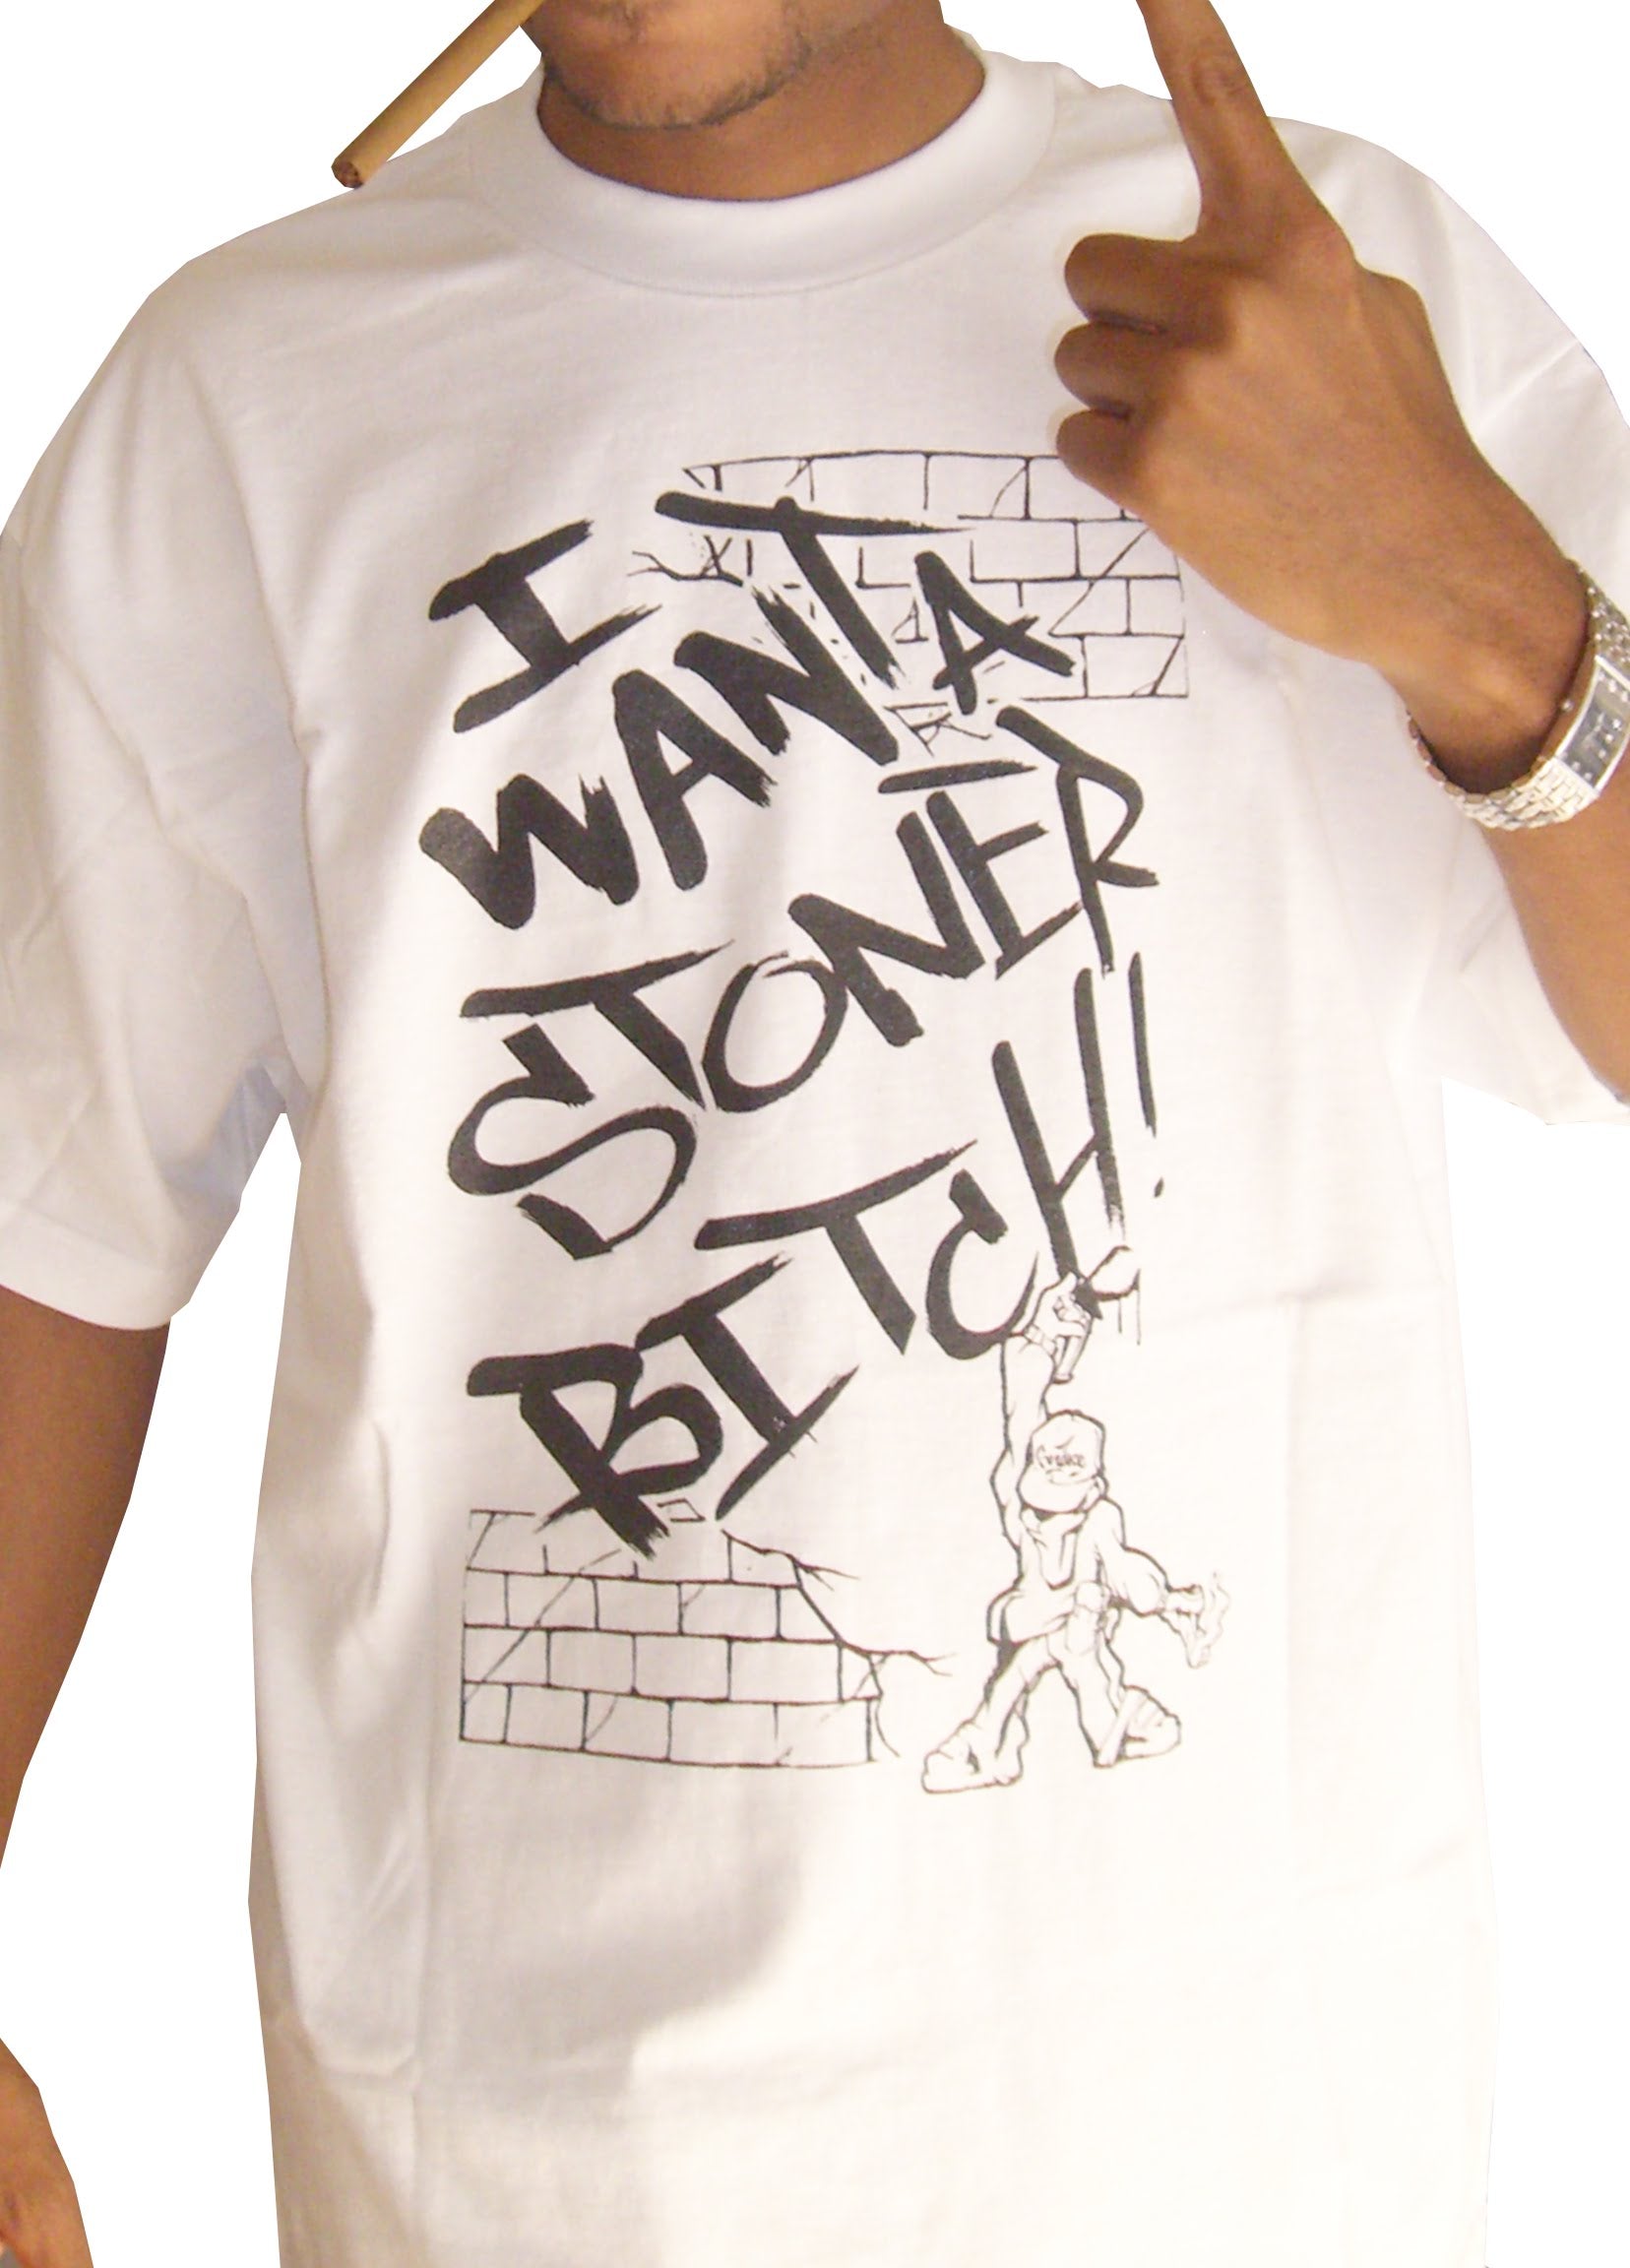 Men's "I Want A Stoner Bitch" White T-shirt